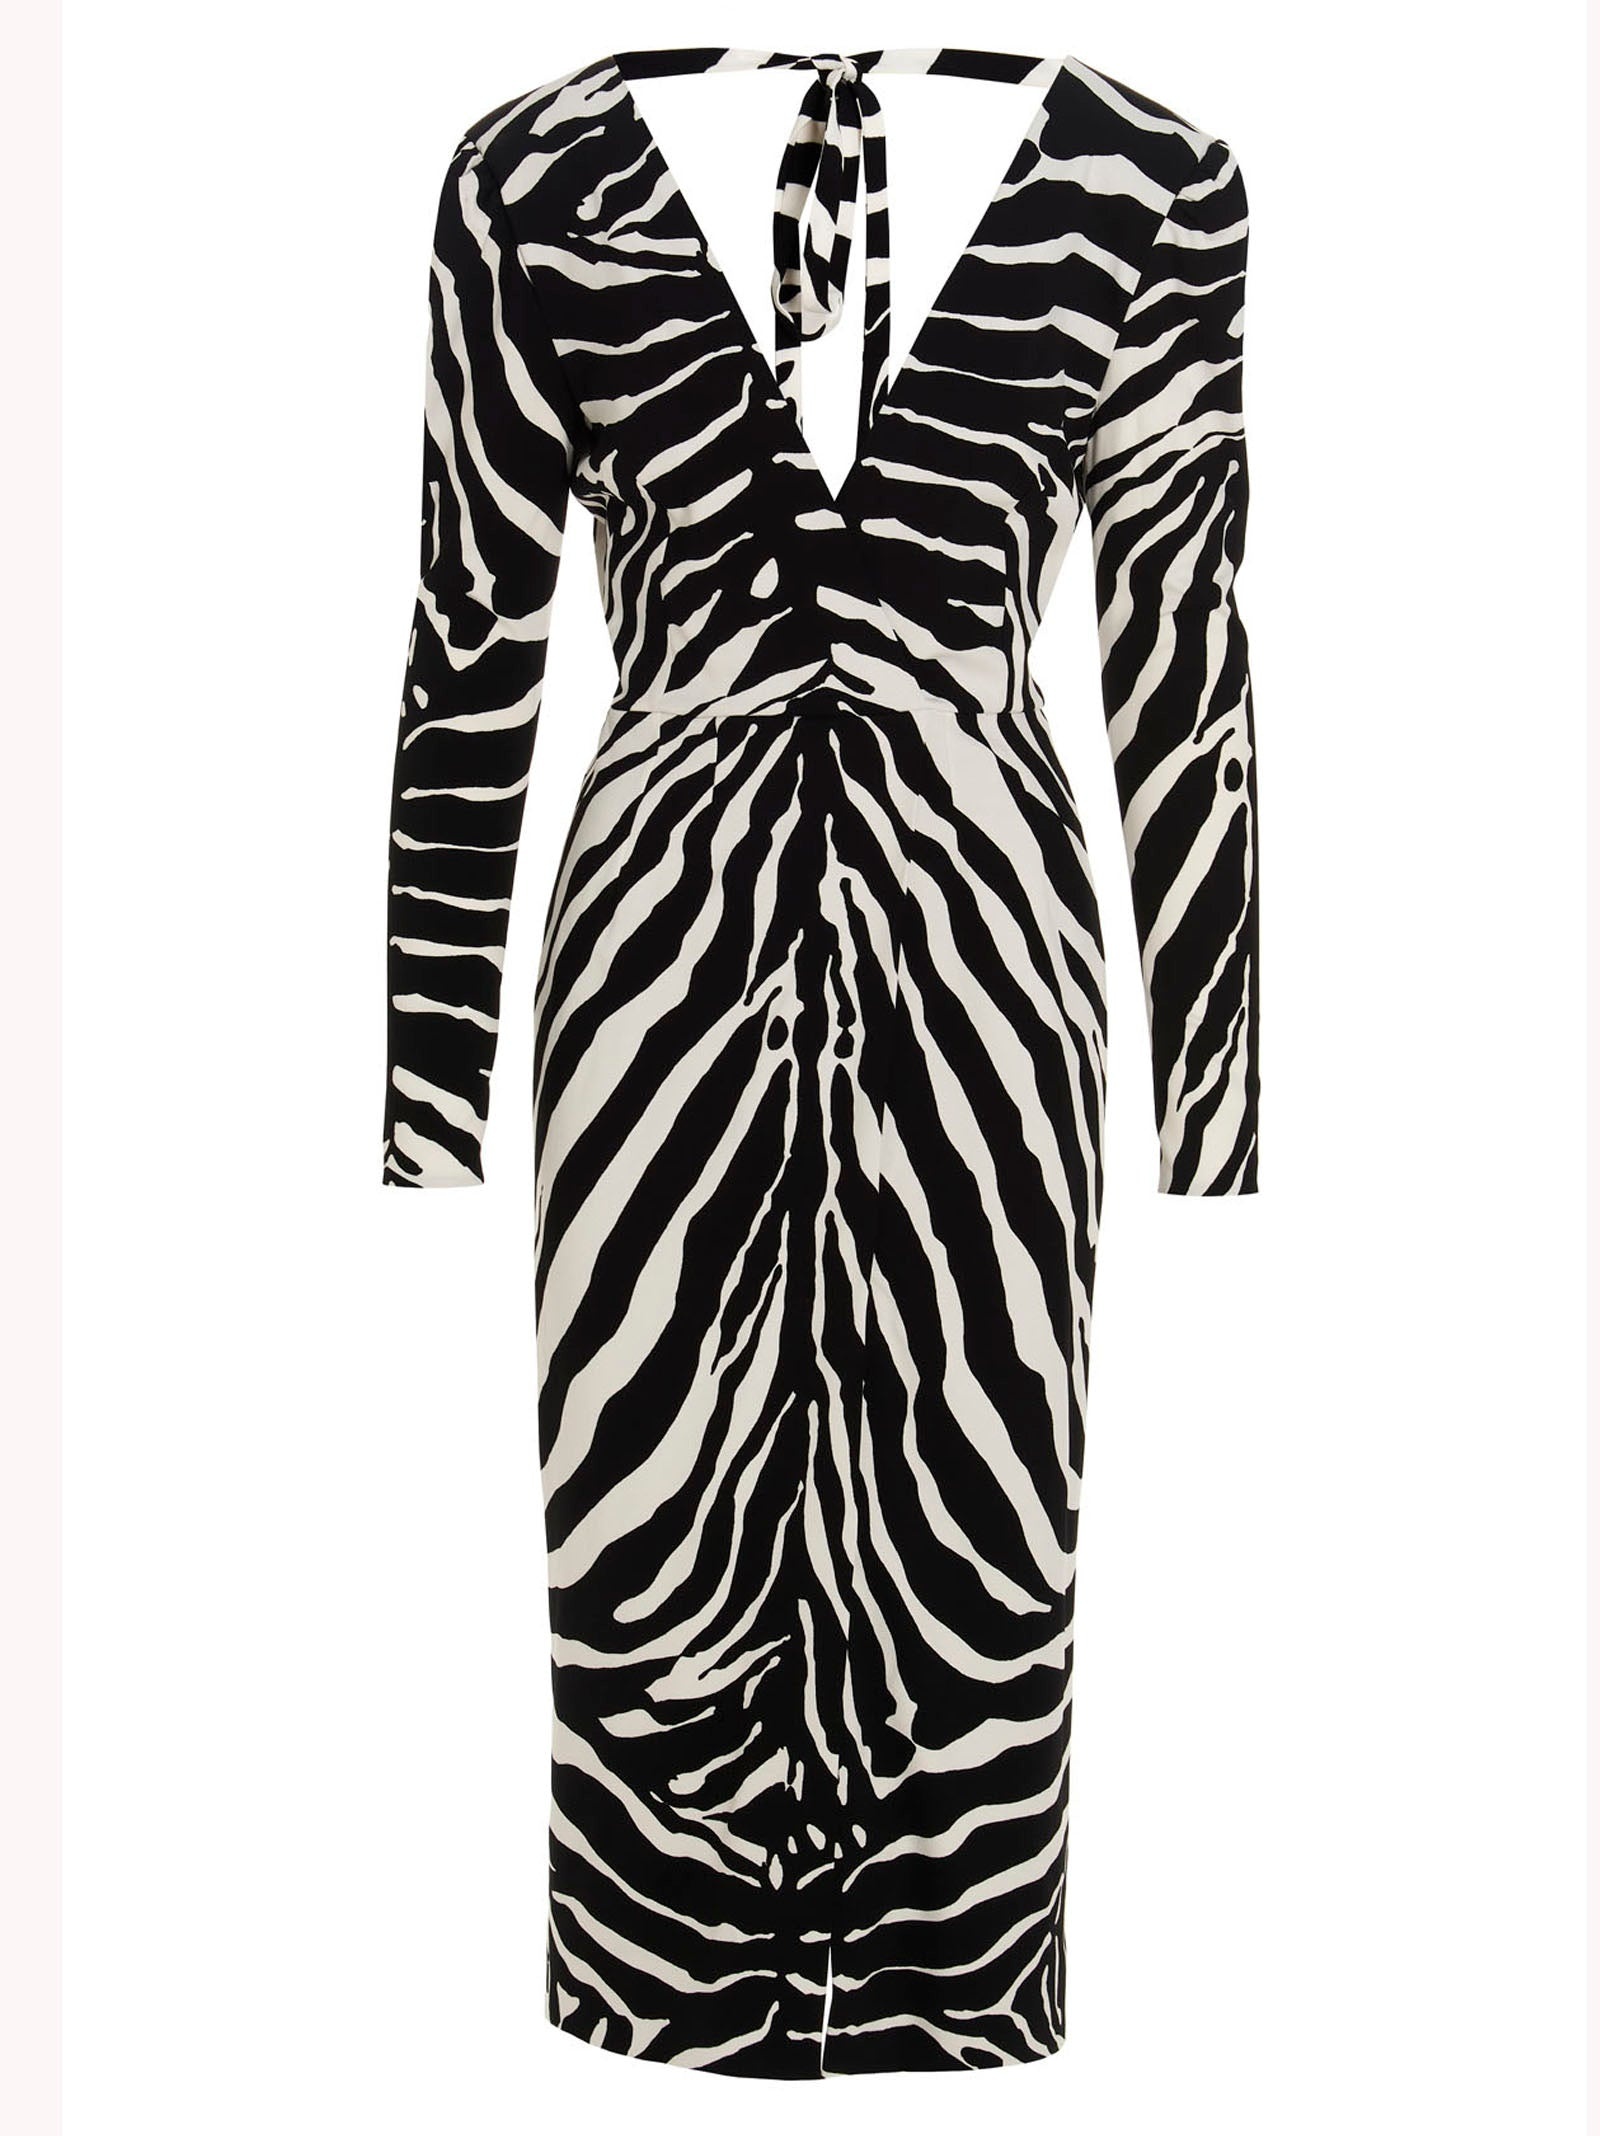 Dolce & Gabbana ‘Zebra’ Dress - 1